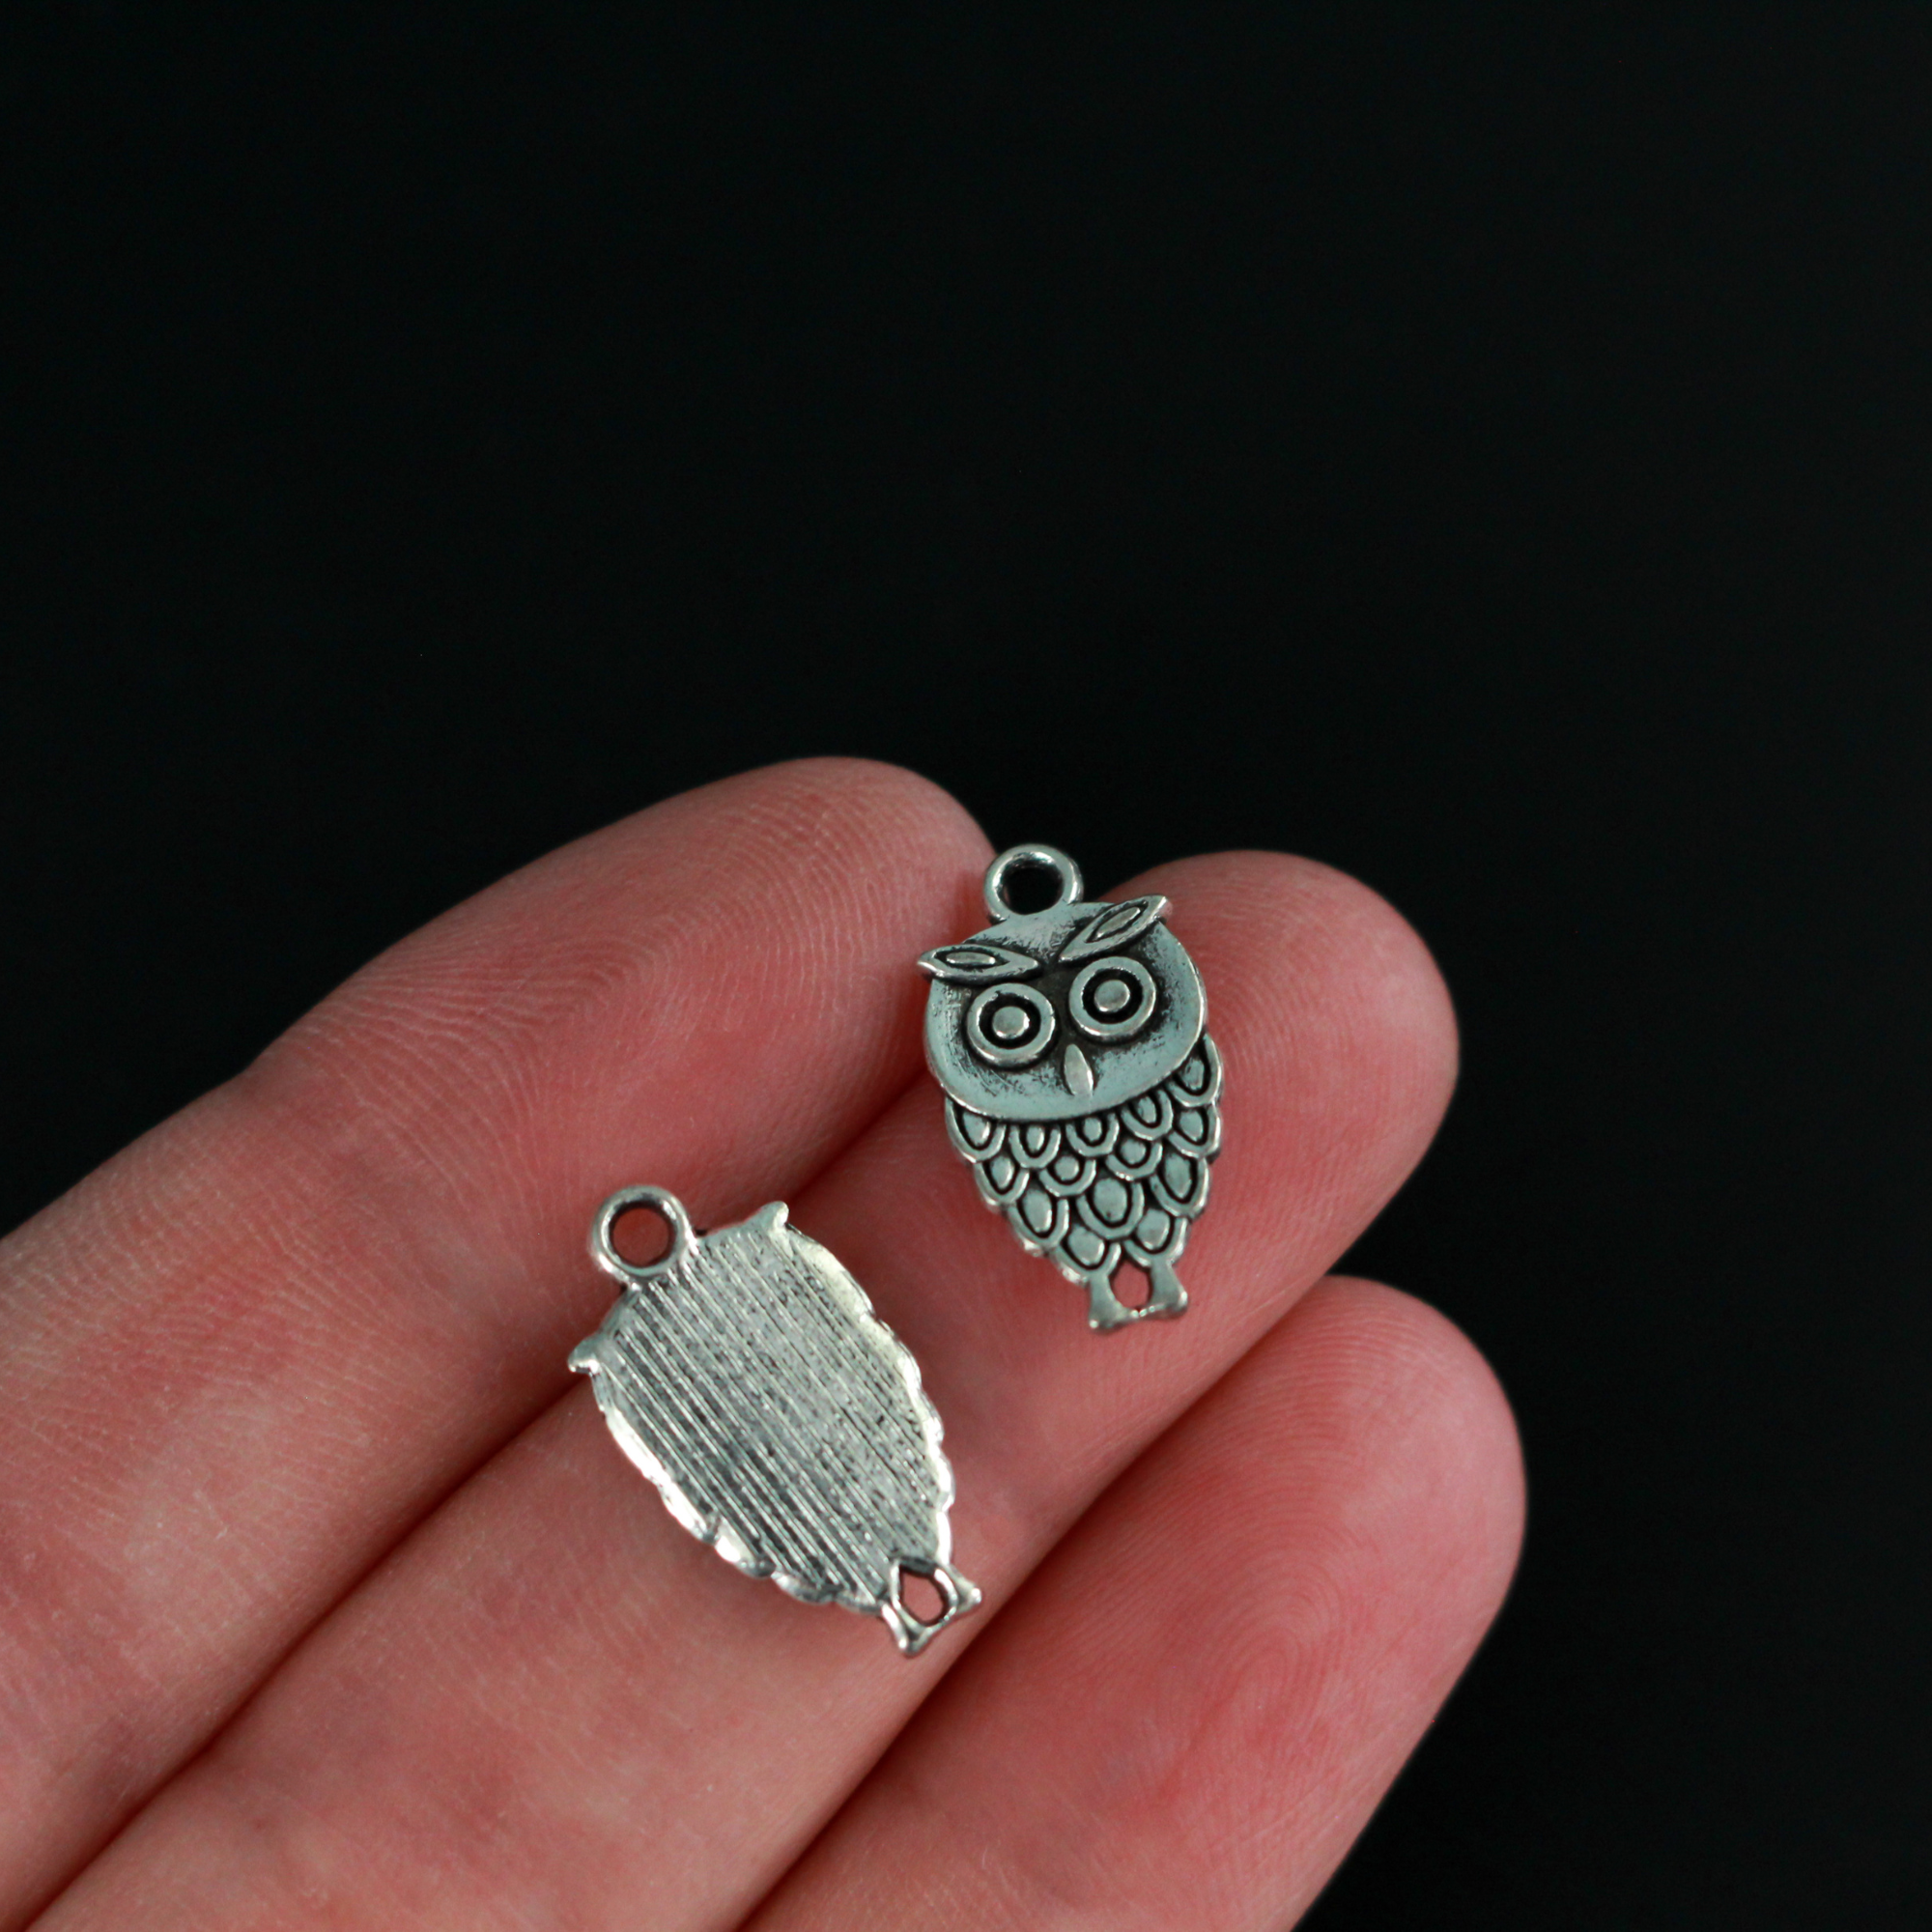 Owl Charm 18mm Long - Symbol of Wisdom - Antiqued Silver Color, 25pcs